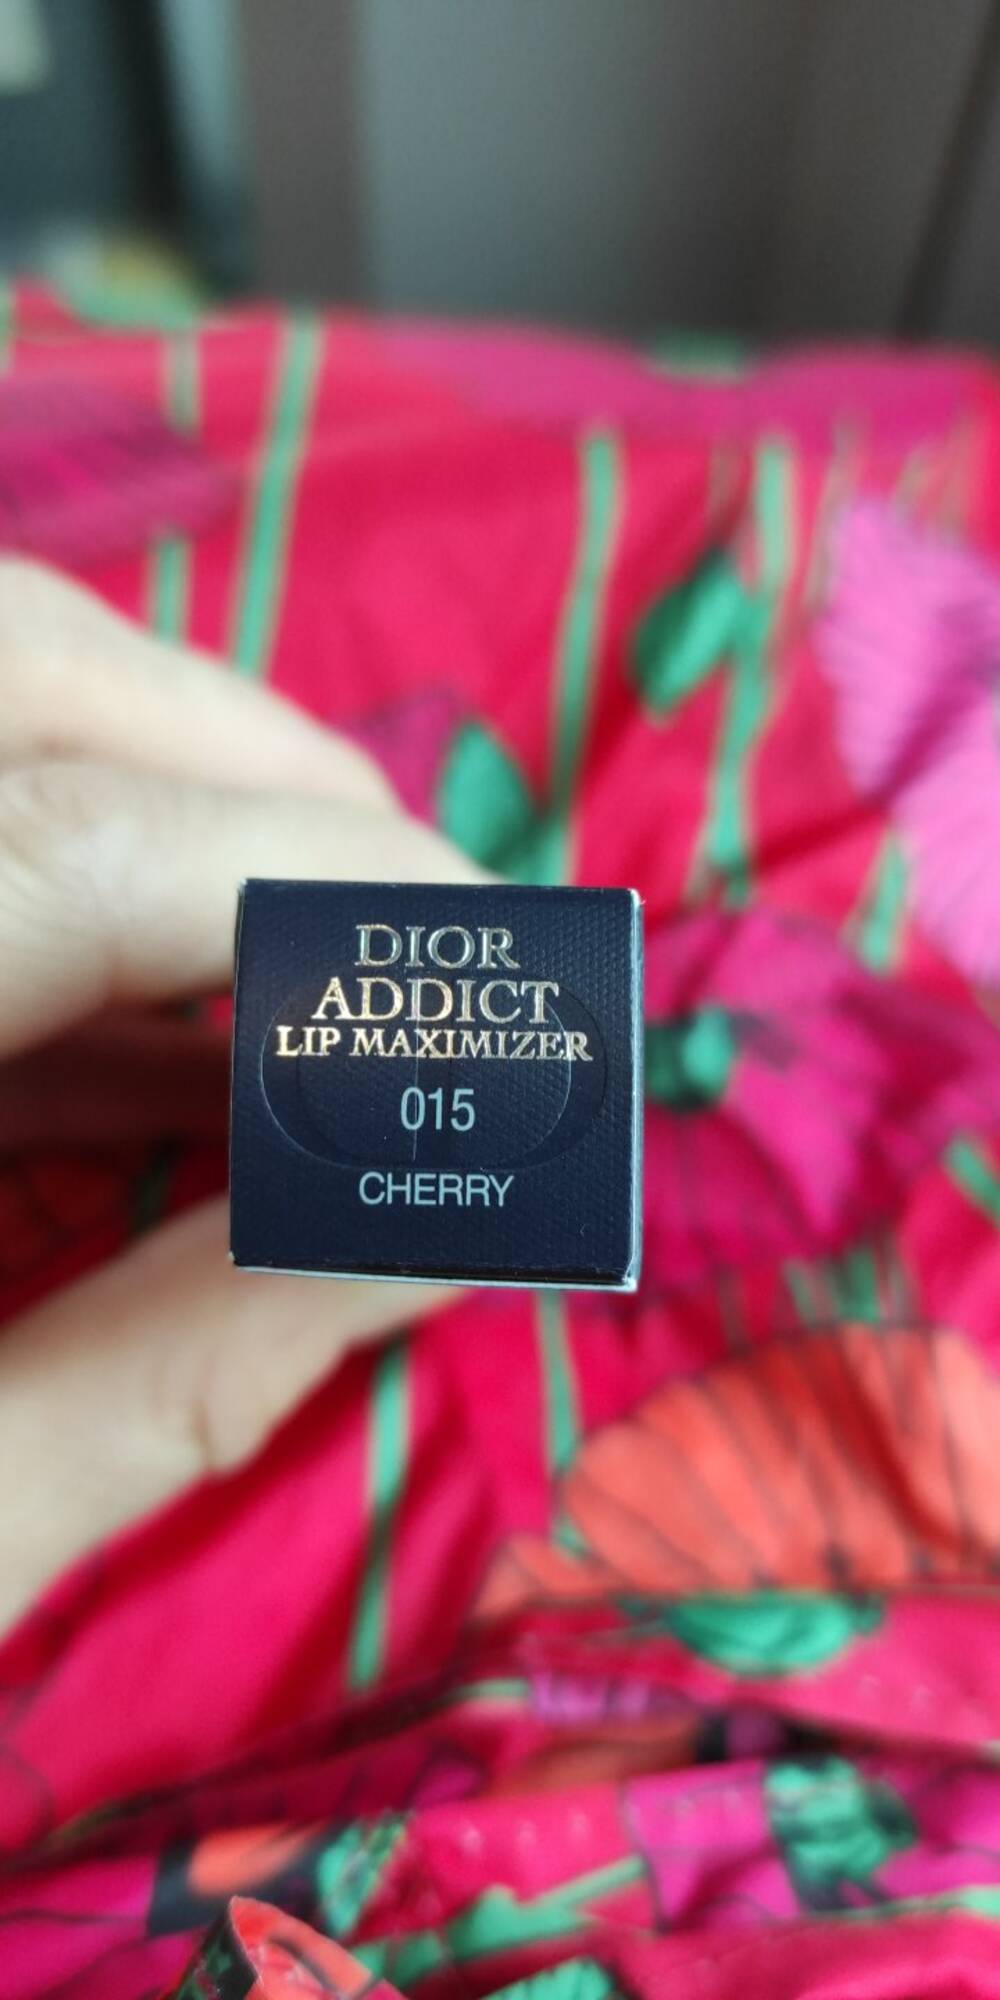 DIOR - Dior addict - Lip maximizer 015 cherry